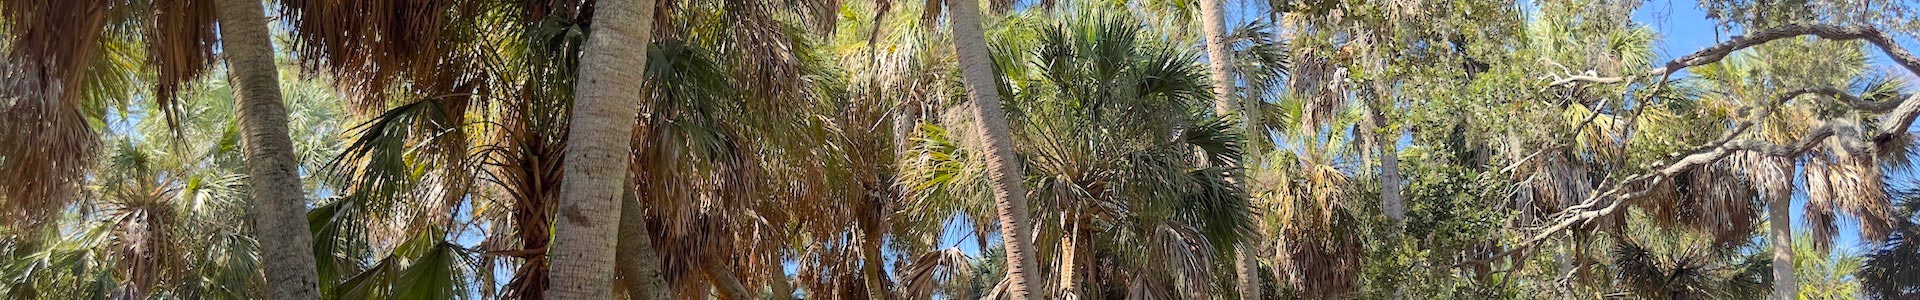 Cabbage Palm ecosystem